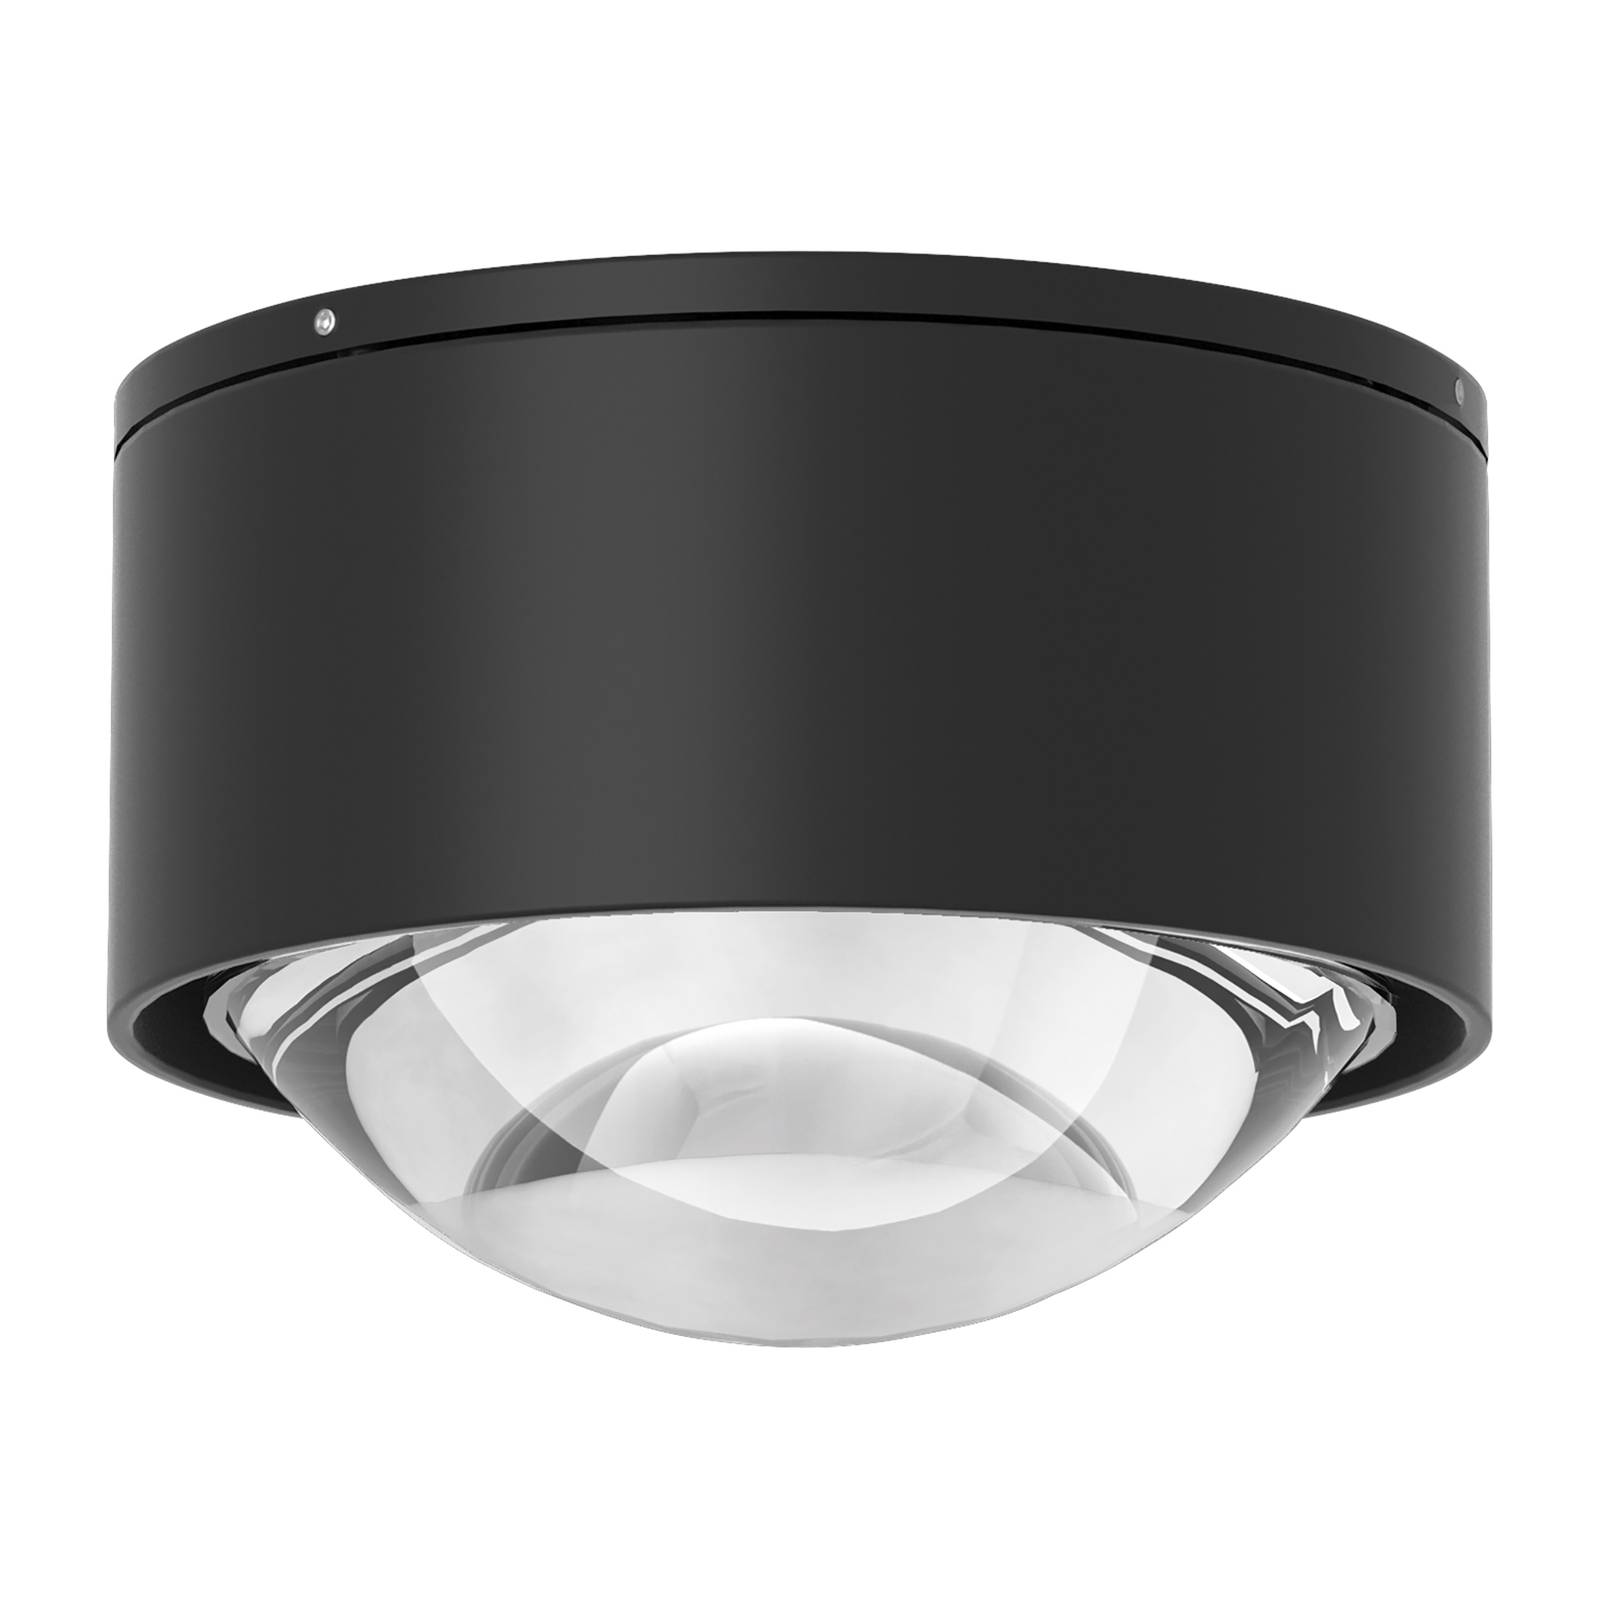 Puk Mini One 2 LED-Spot, Linse klar, schwarz matt von Top Light